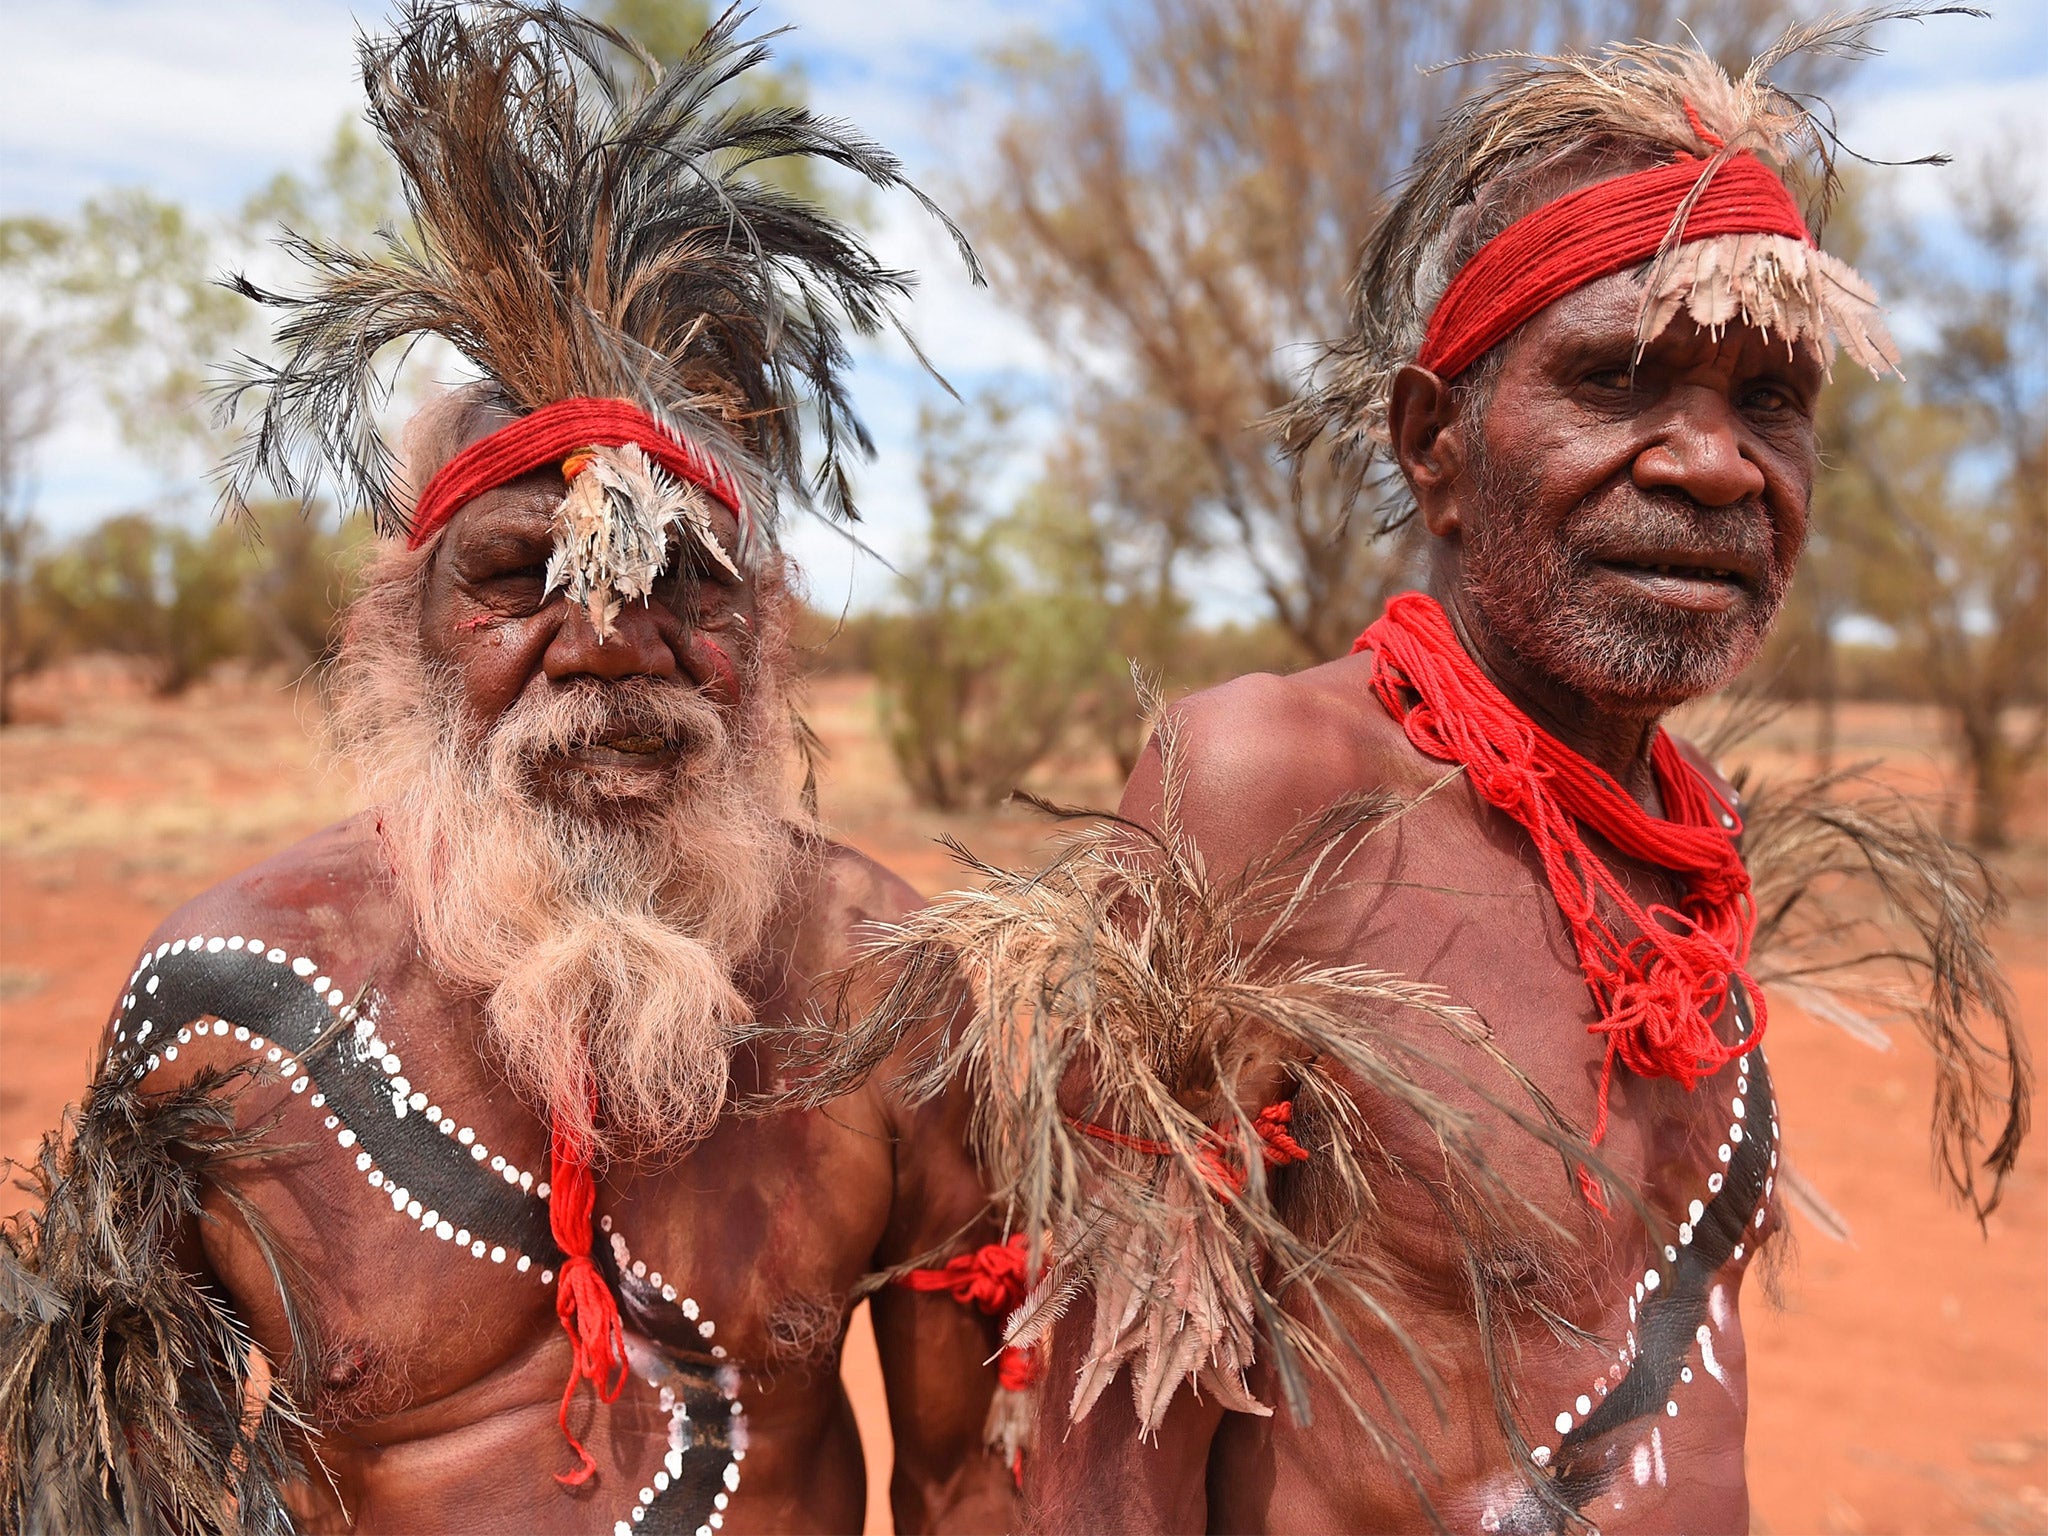 &#13;
Aboriginal men at the anniversary celebrations in Mutitjulu &#13;